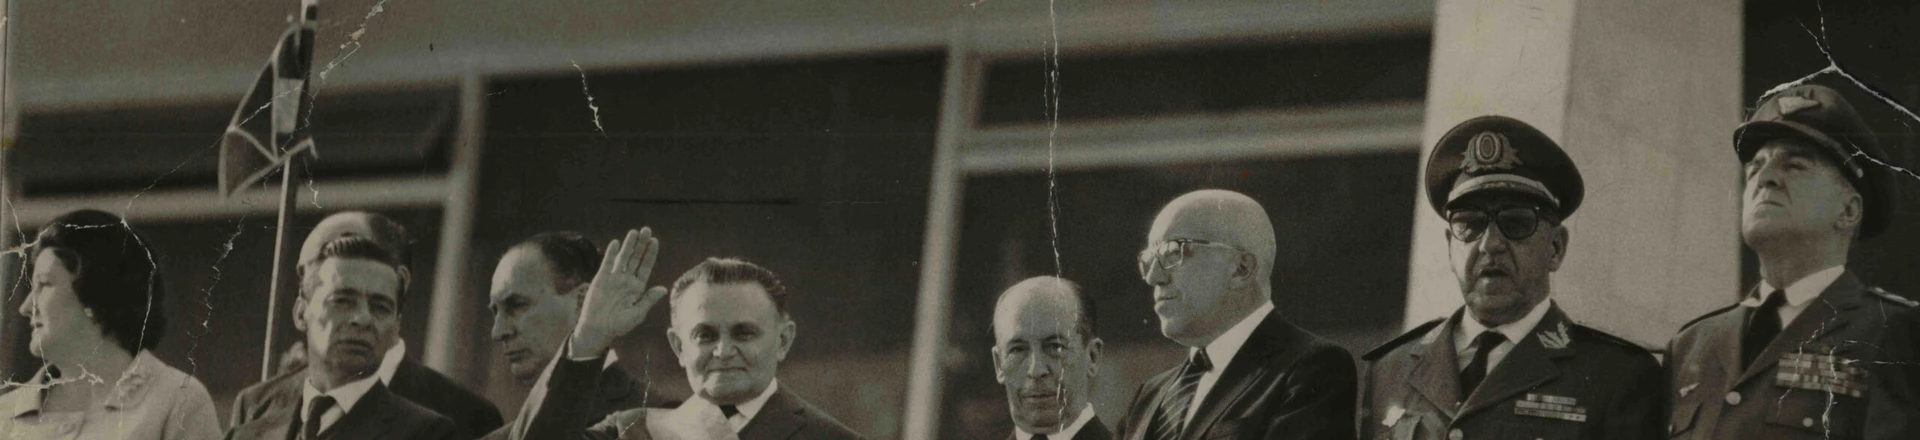 Posse do marechal Humberto de Alencar Castelo Branco na presidência da República de 1964 a 1967.